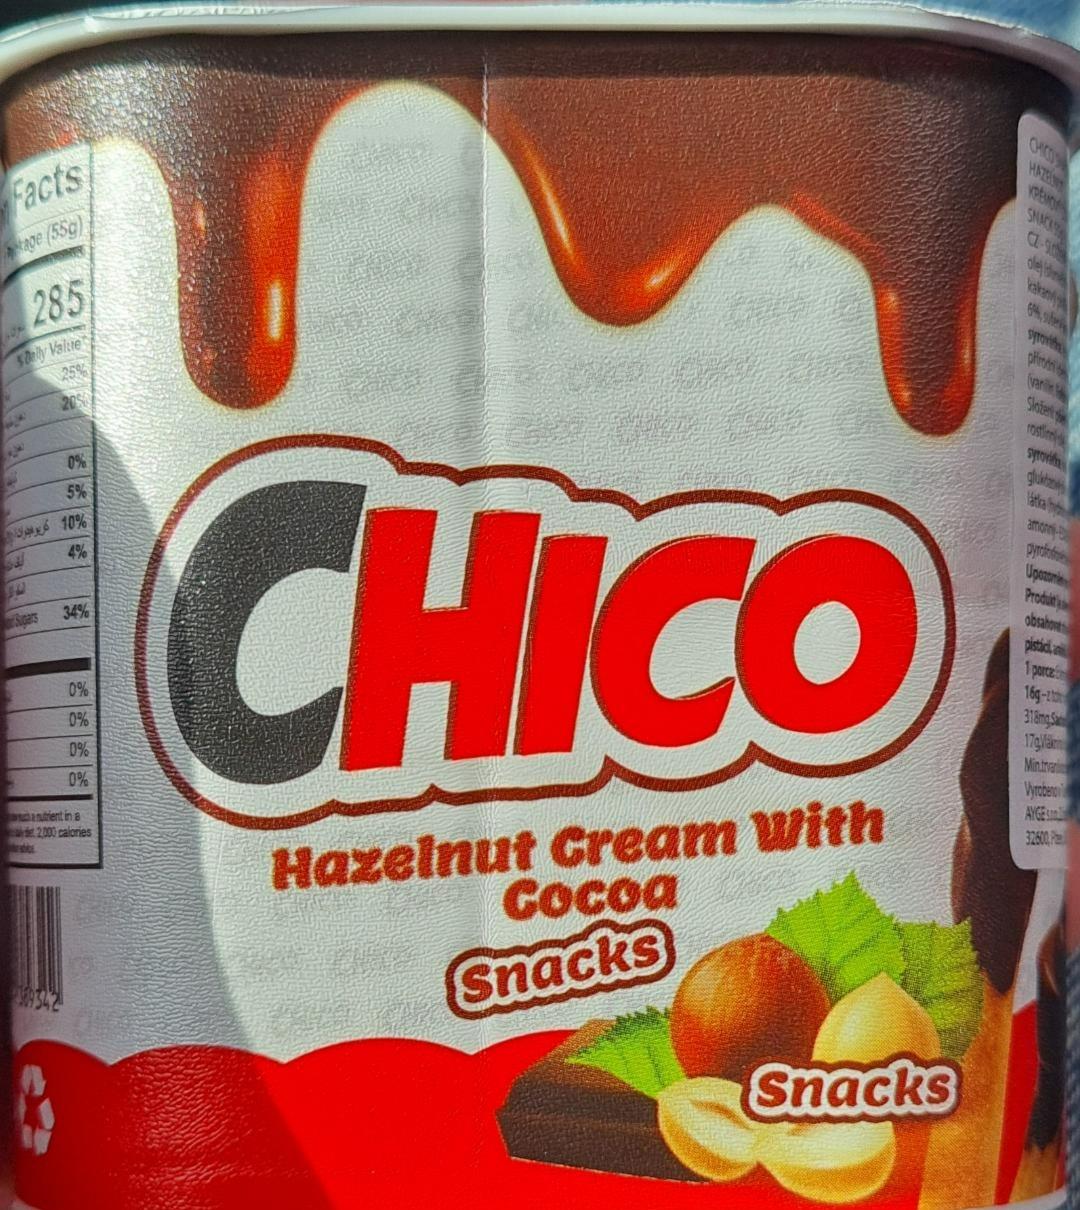 Fotografie - Hazelnut cream with cocoa snacks Chico